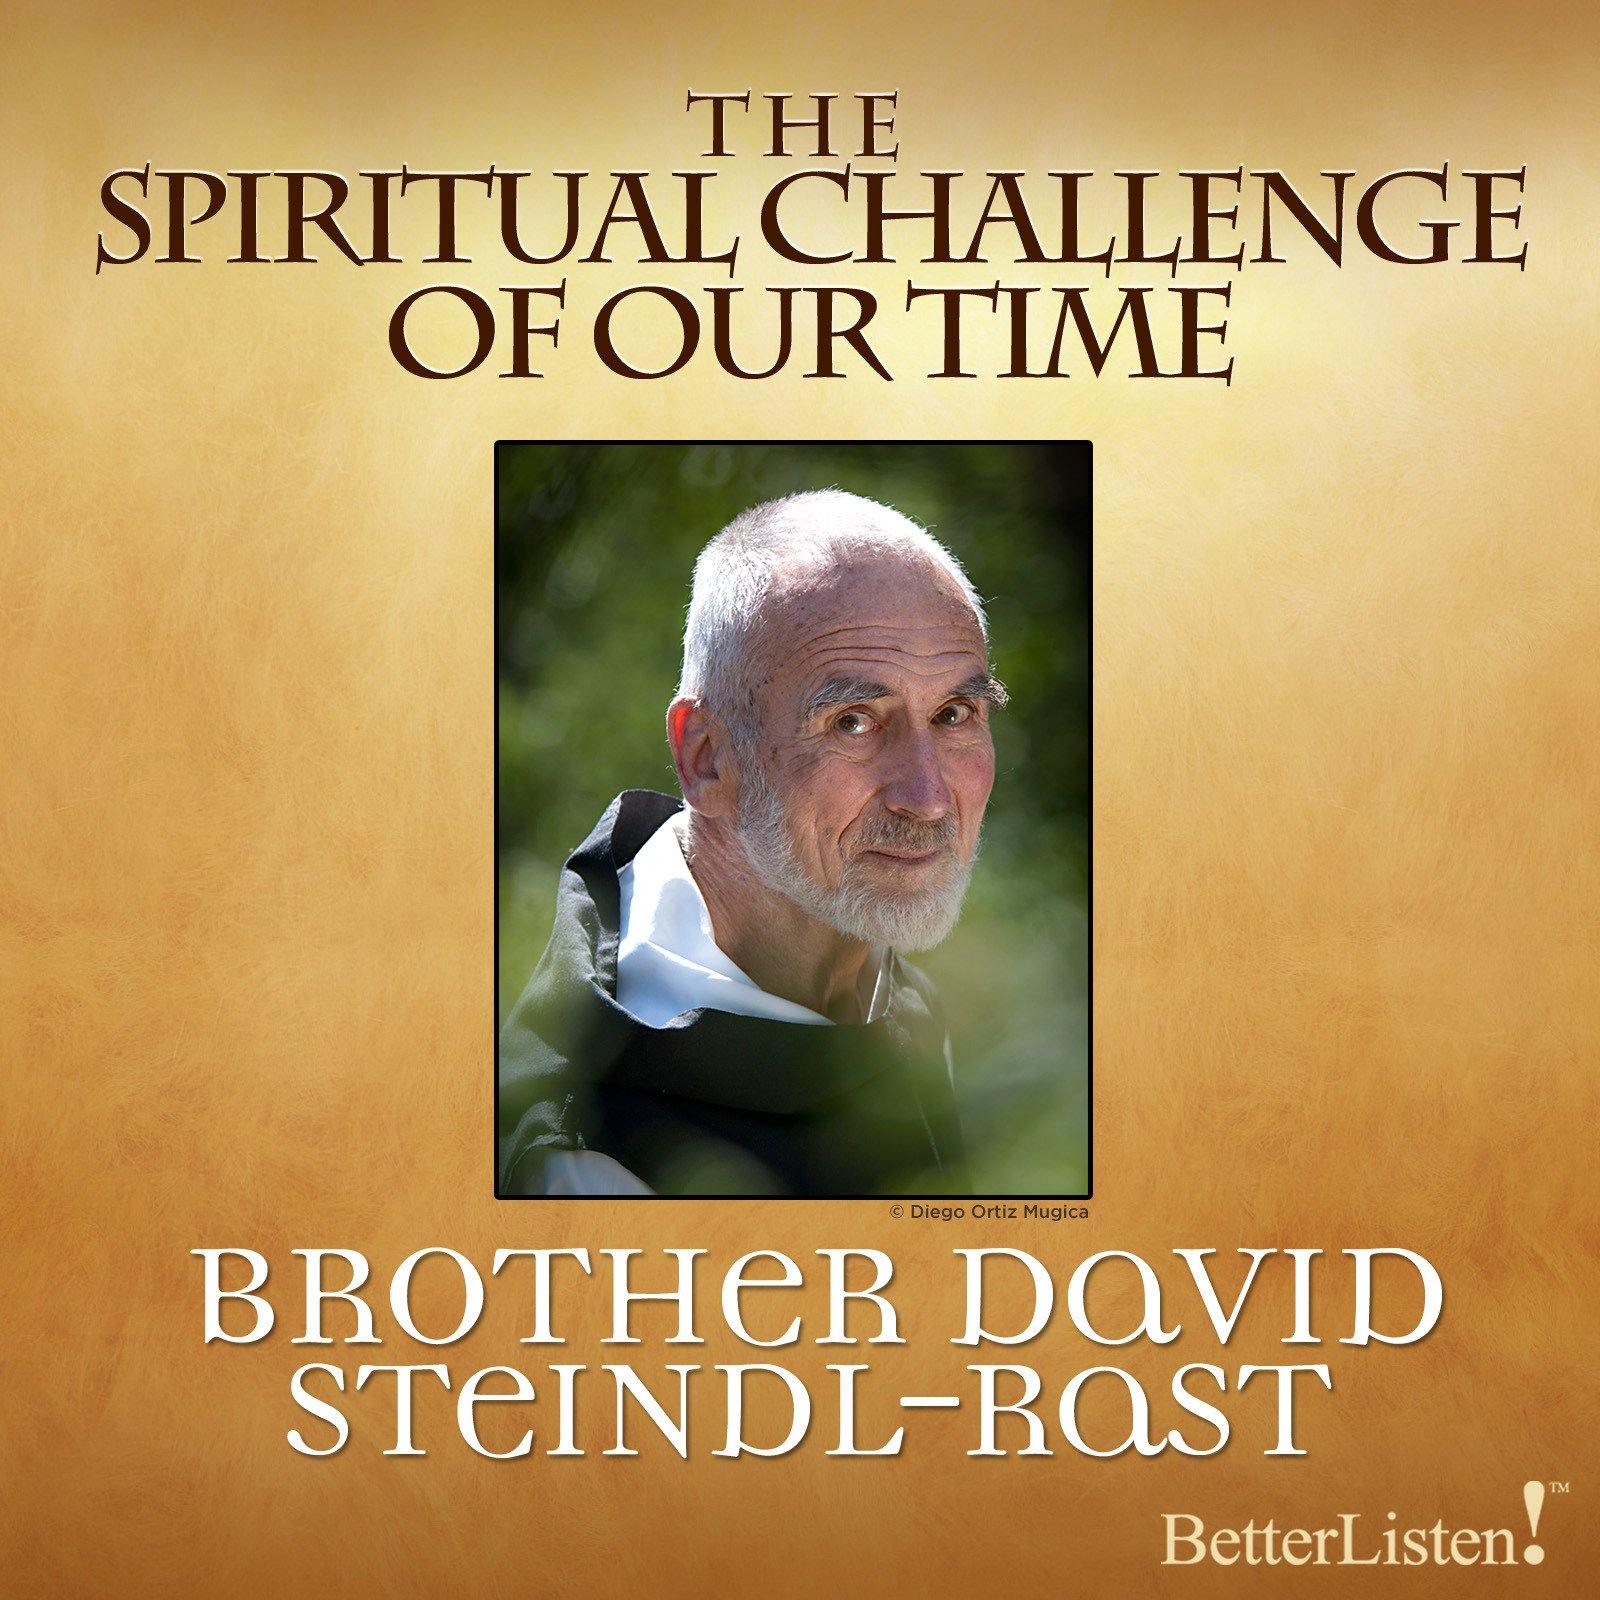 The Spiritual Challenge of Our Time with Brother David Steindl-Rast Audio Program BetterListen! - BetterListen!